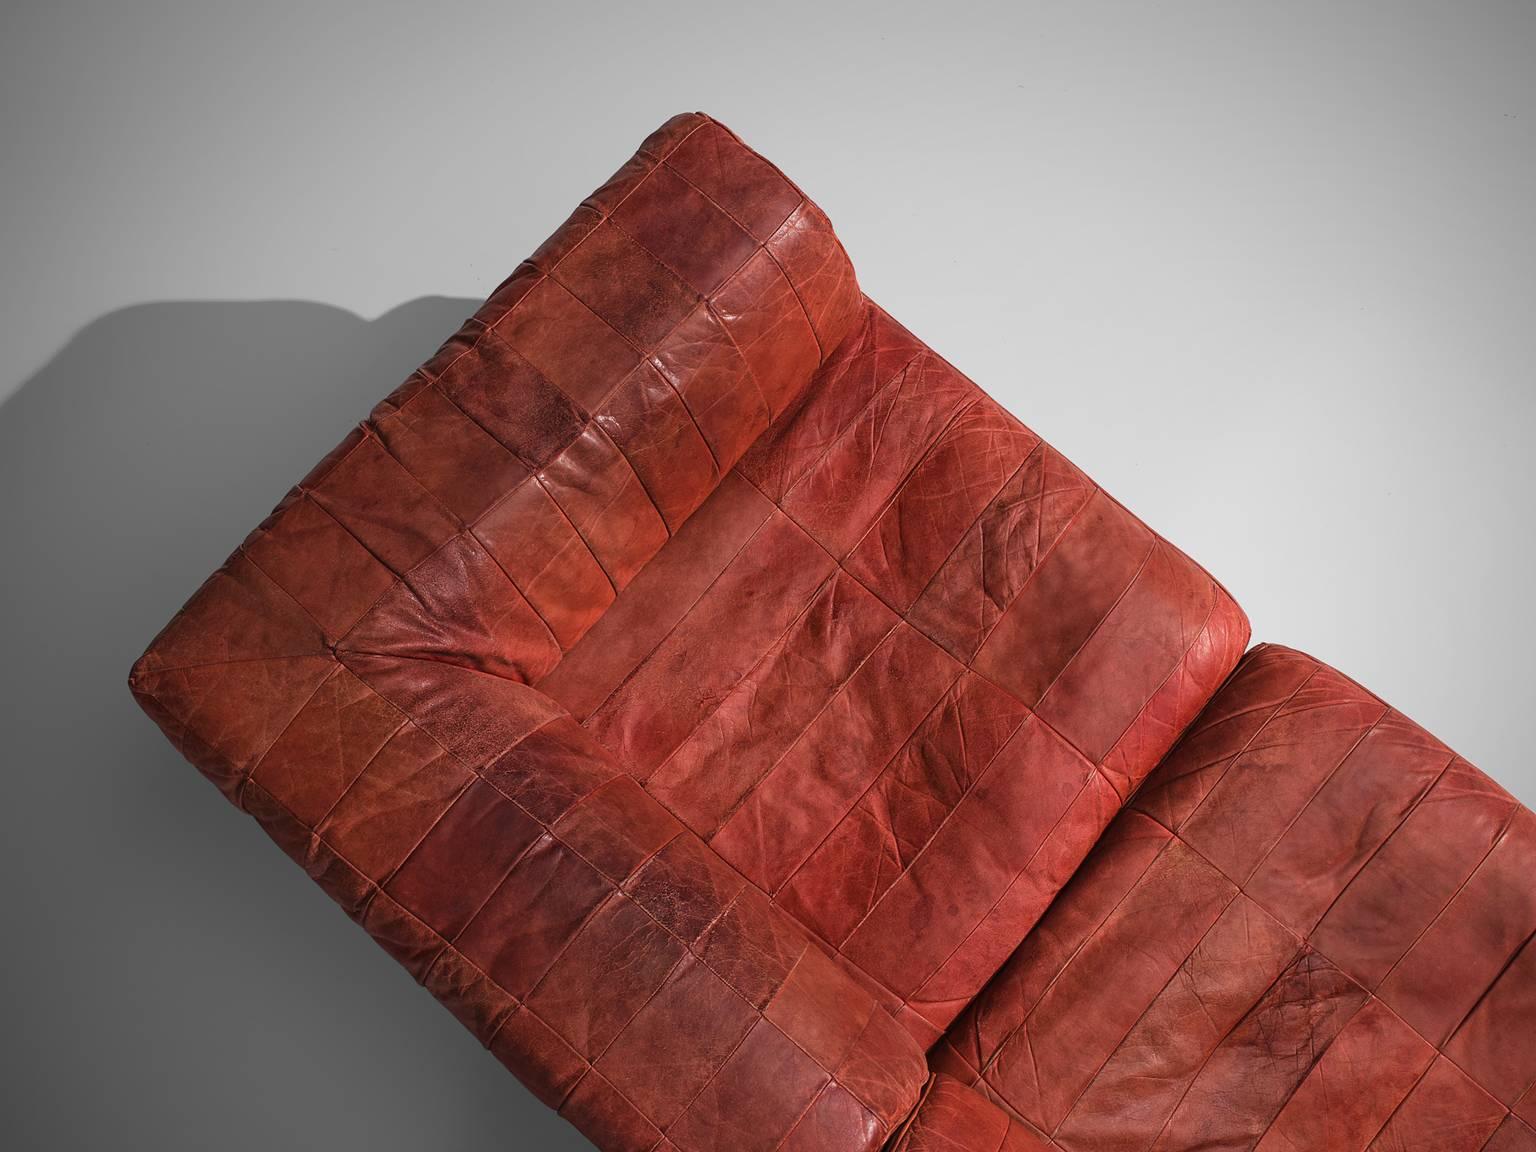 Swiss De Sede DS88 Red Modular Sofa Leather for De Sede